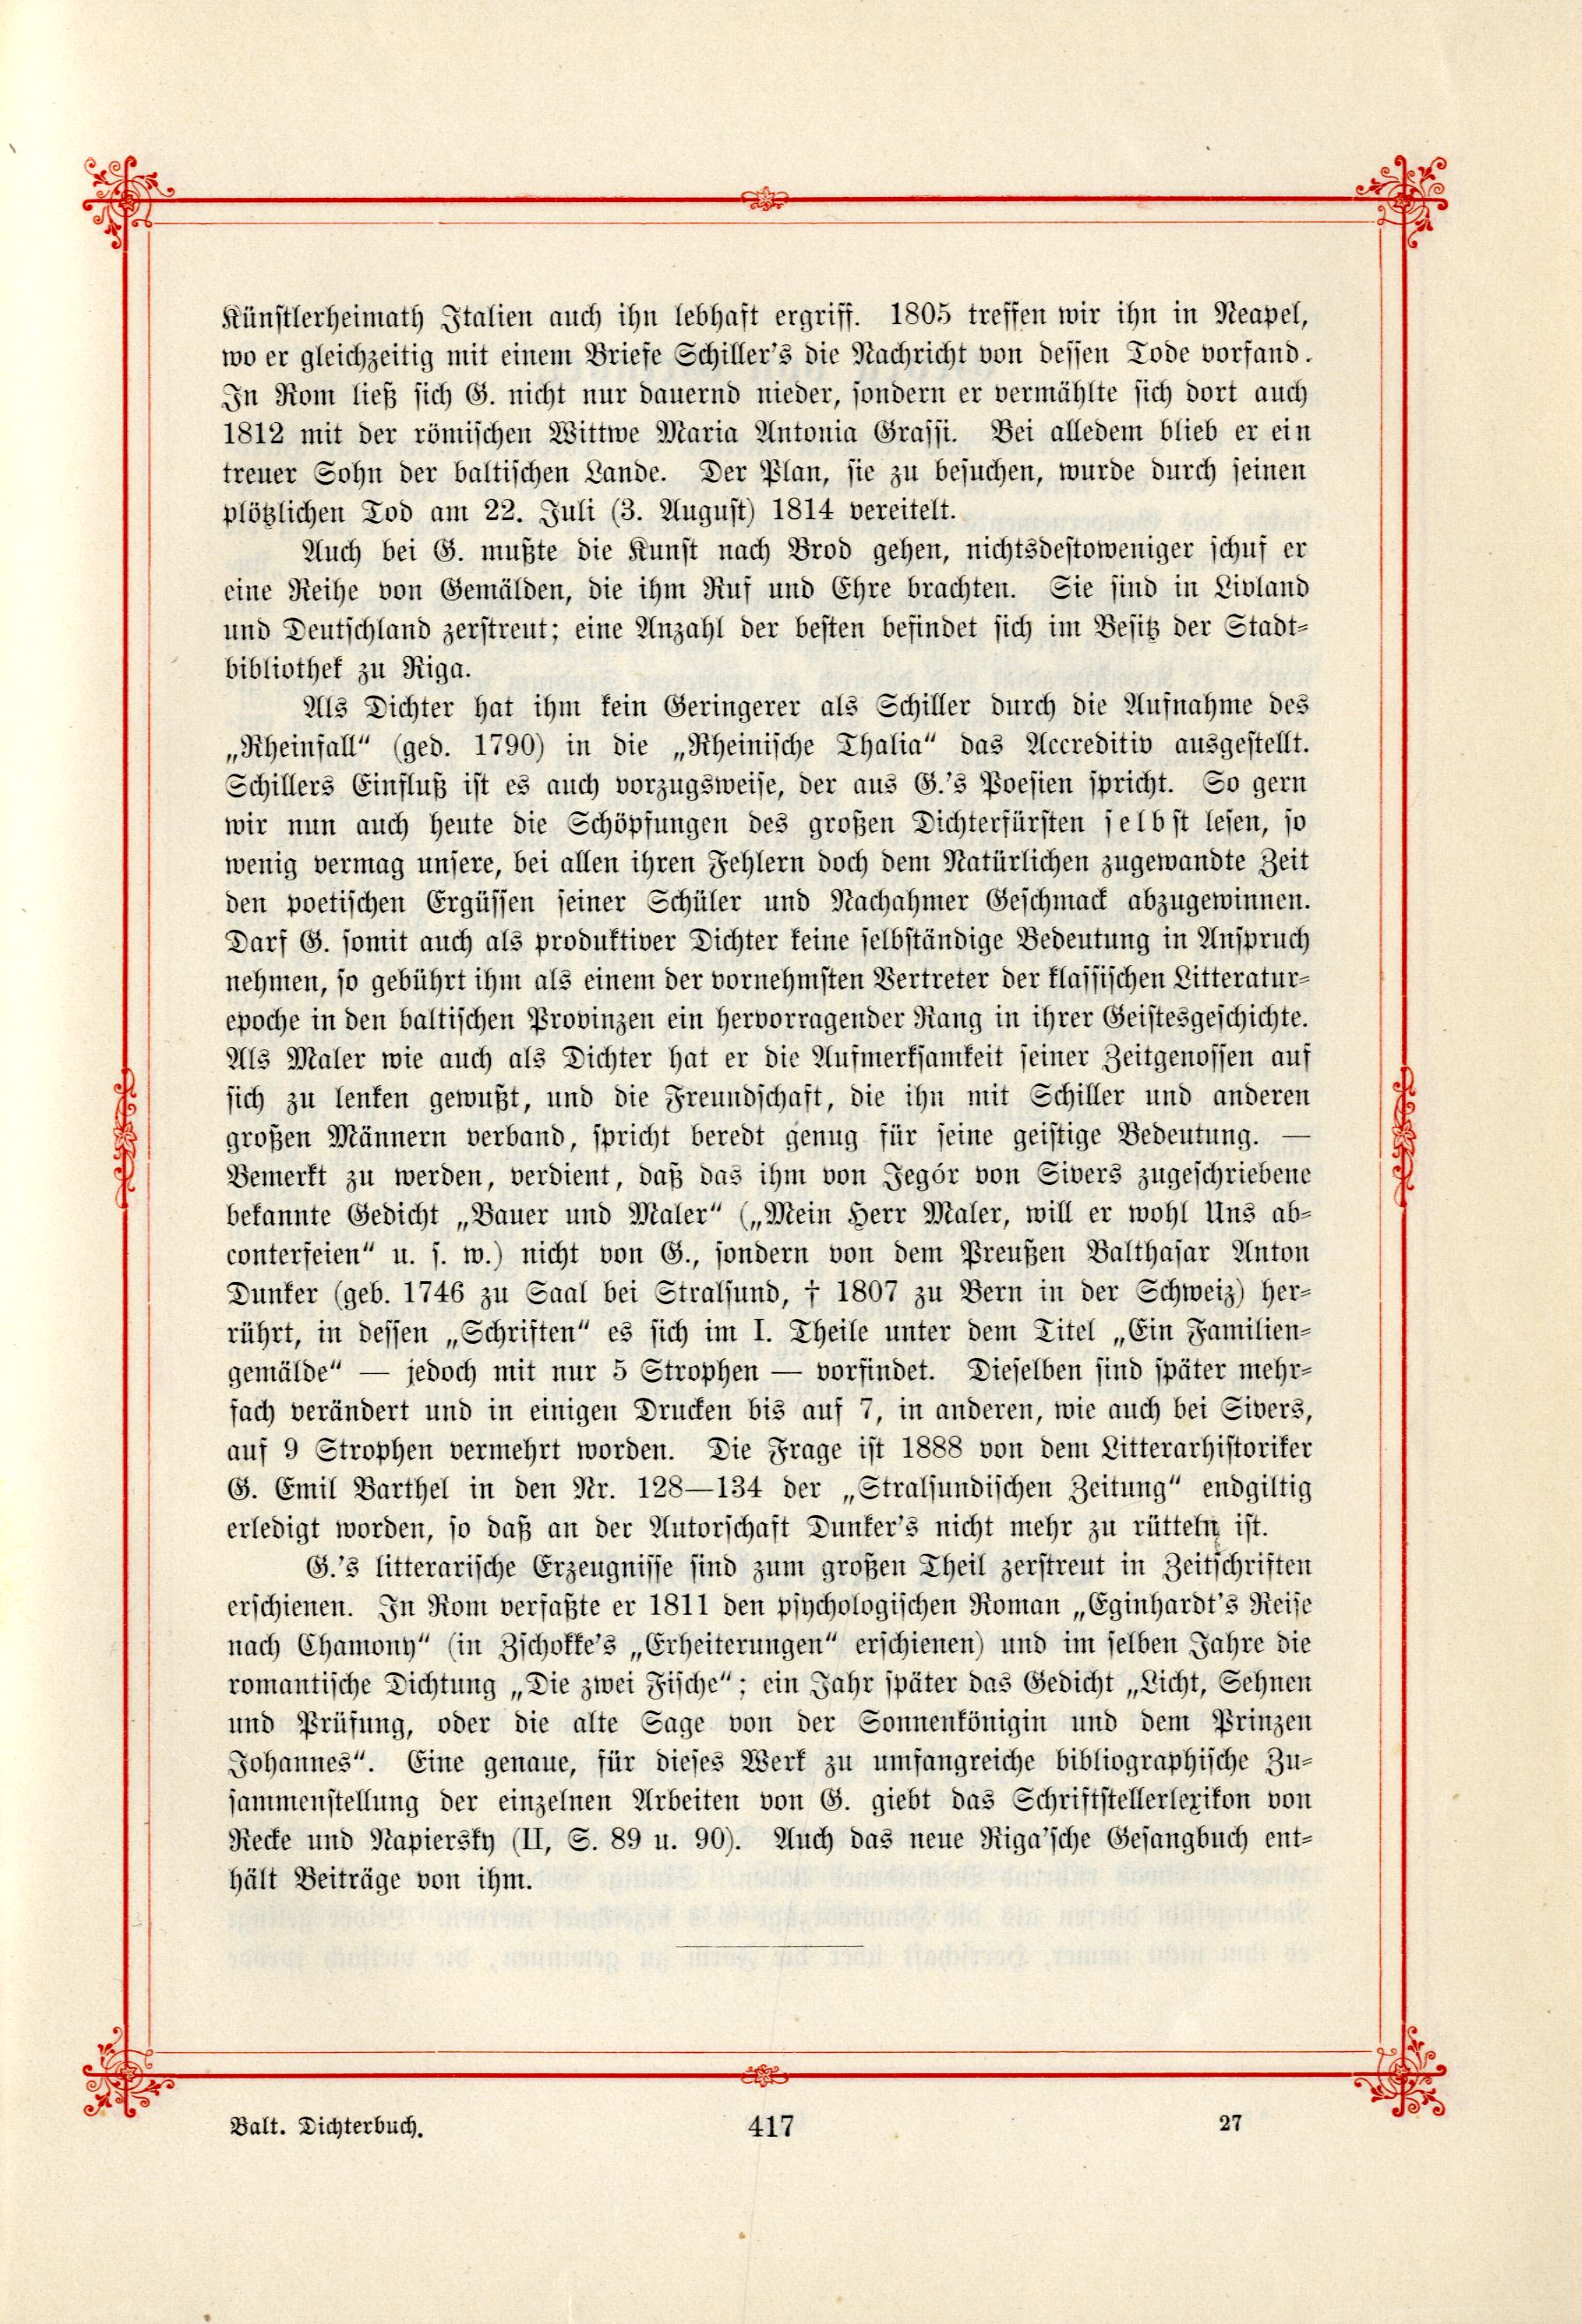 Das Baltische Dichterbuch (1895) | 463. (417) Основной текст